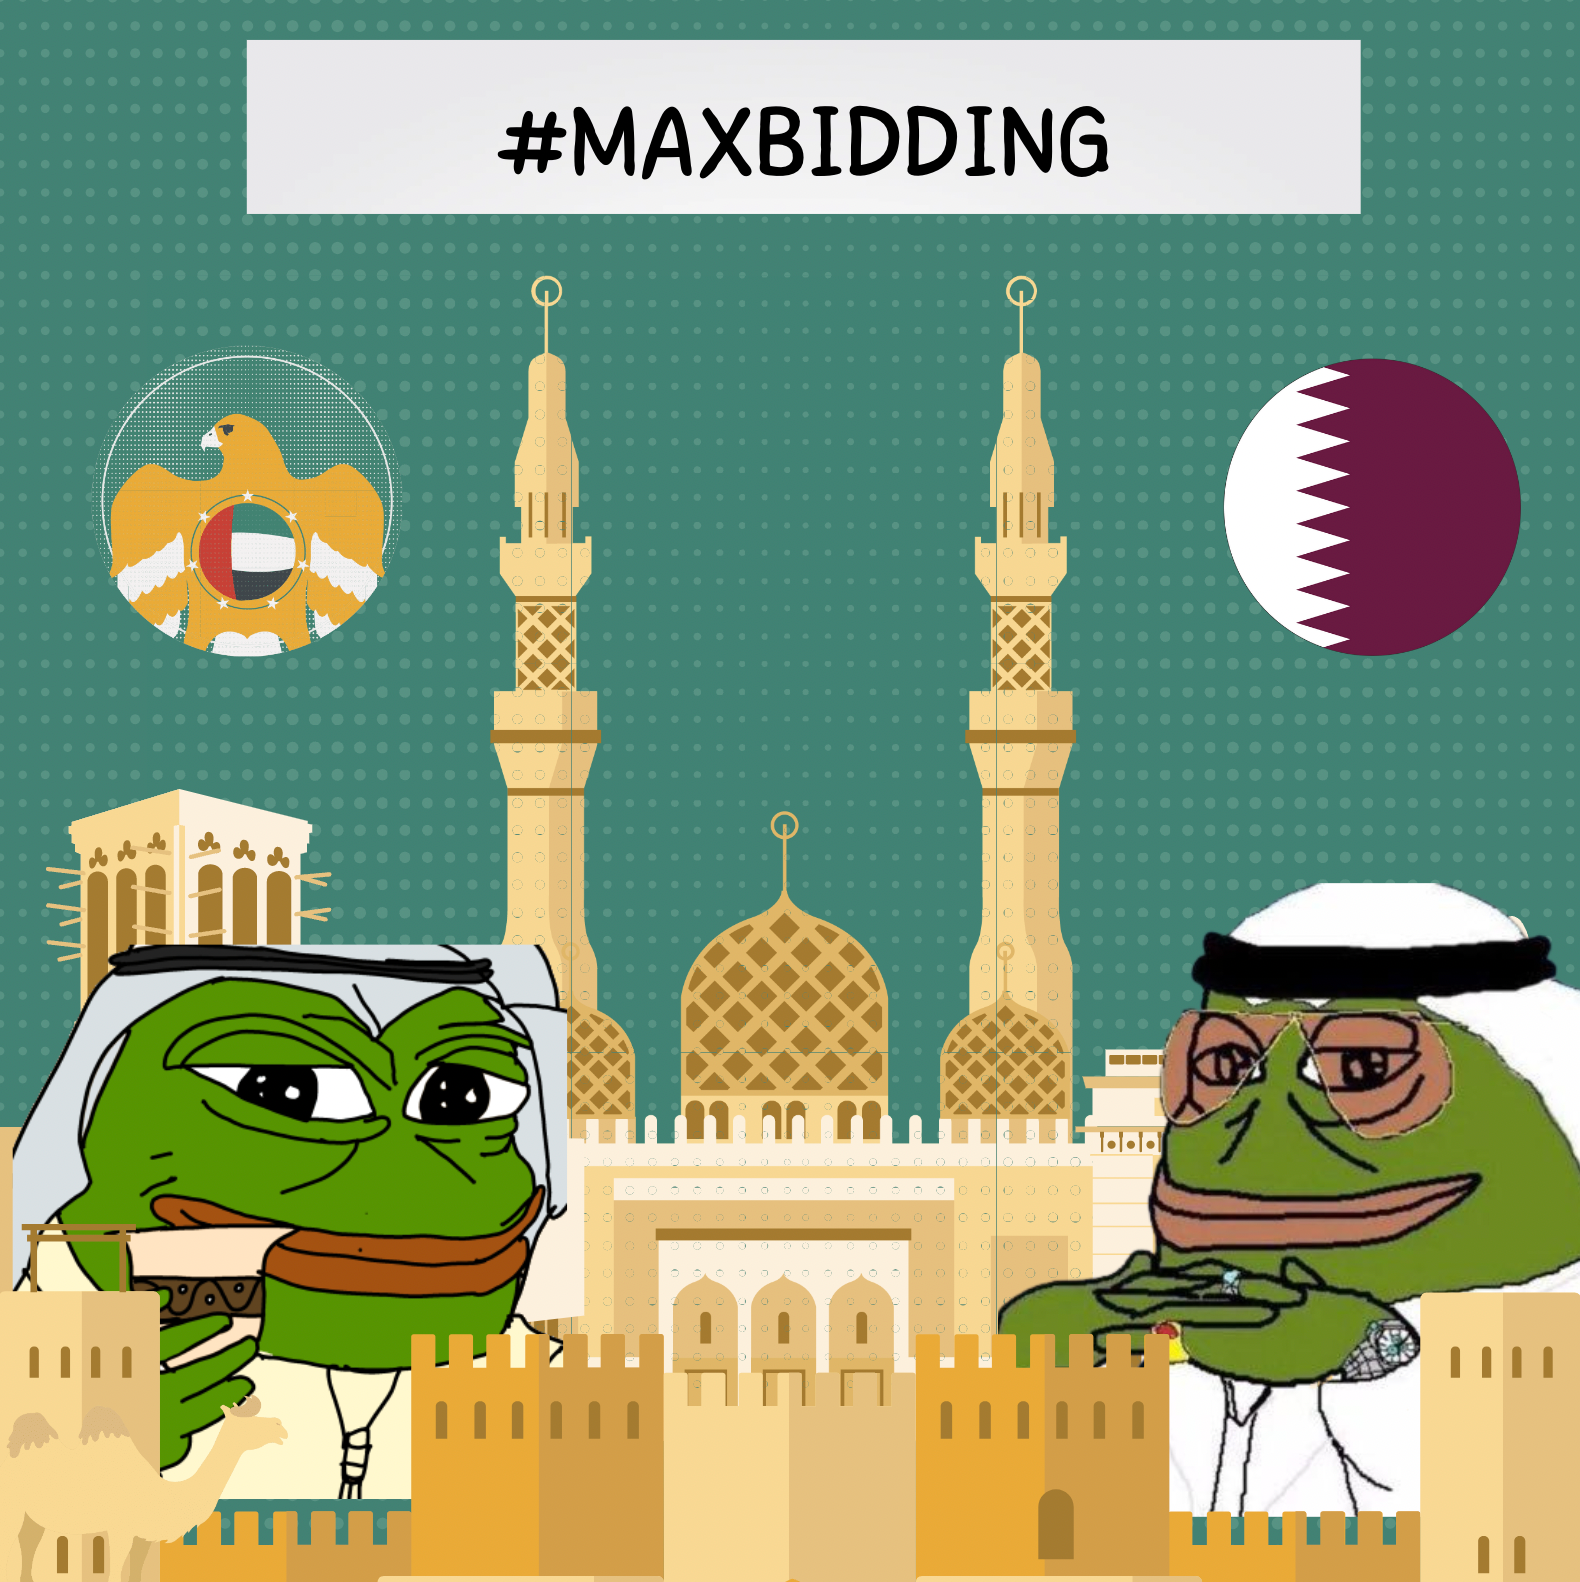 The Saudis #MAXBIDDING thing